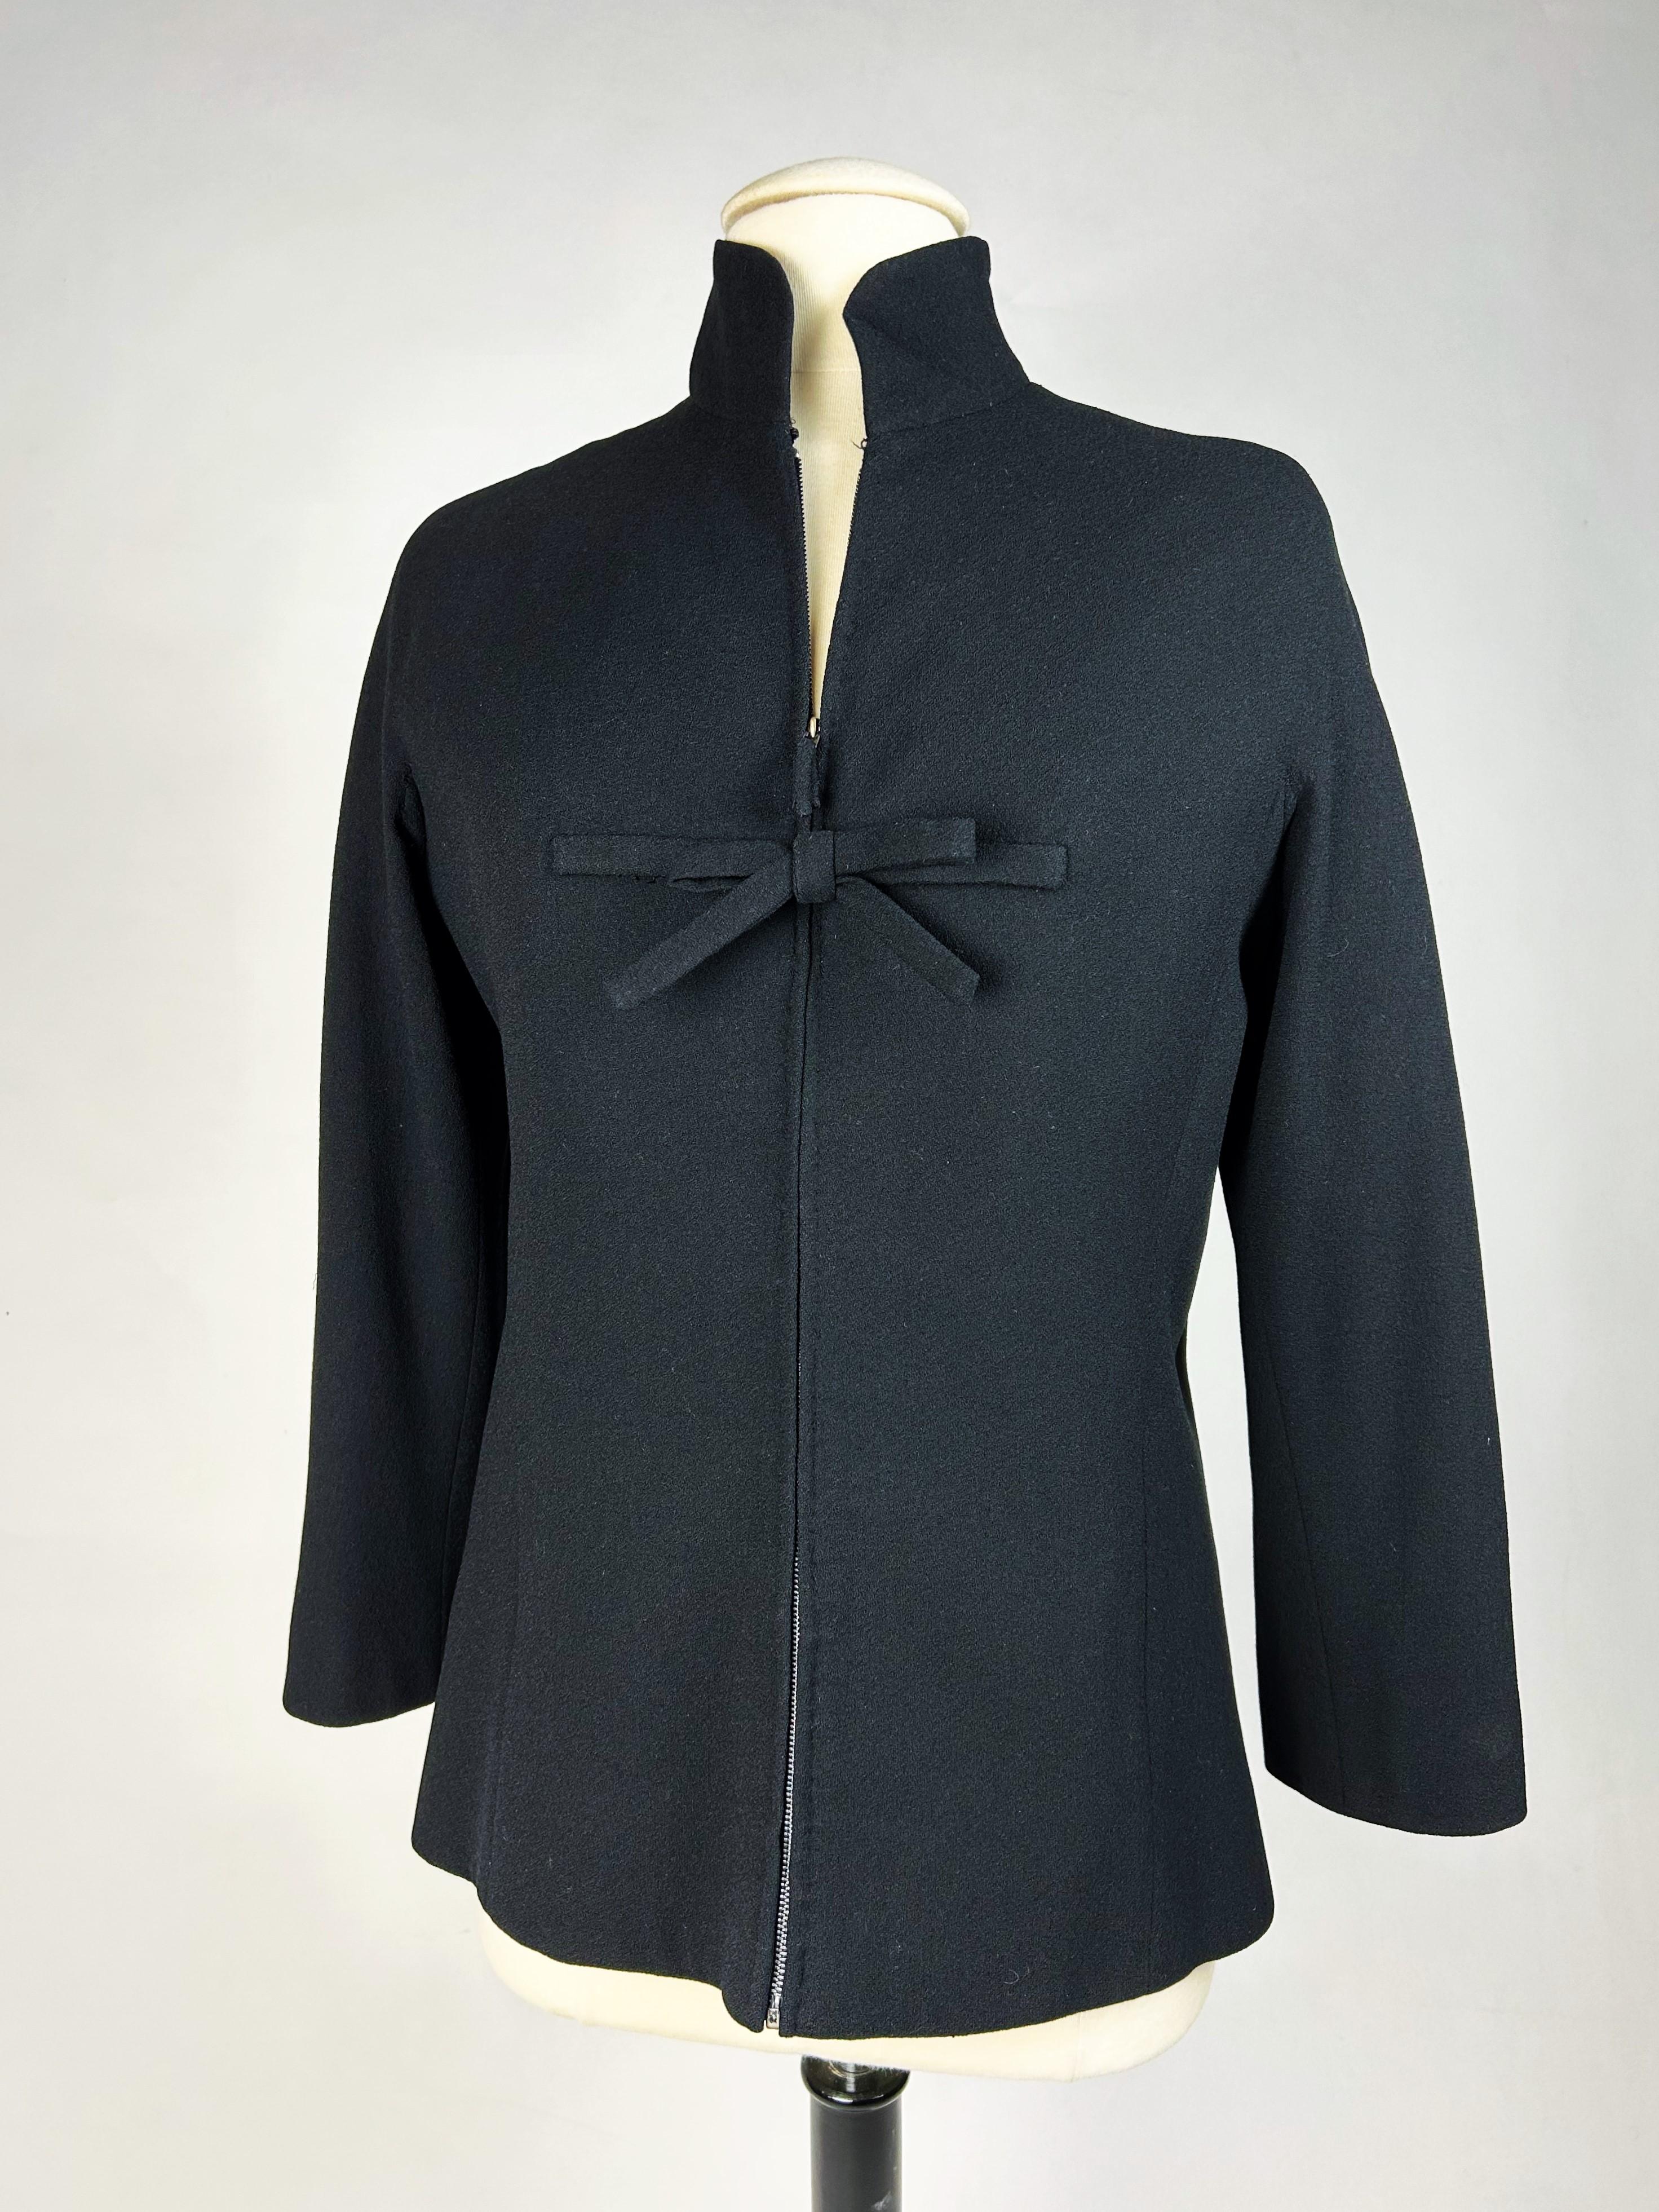 A black kimono jacket by Pierre Balmain Haute Couture n. 111036 Circa 1975-1980 For Sale 3